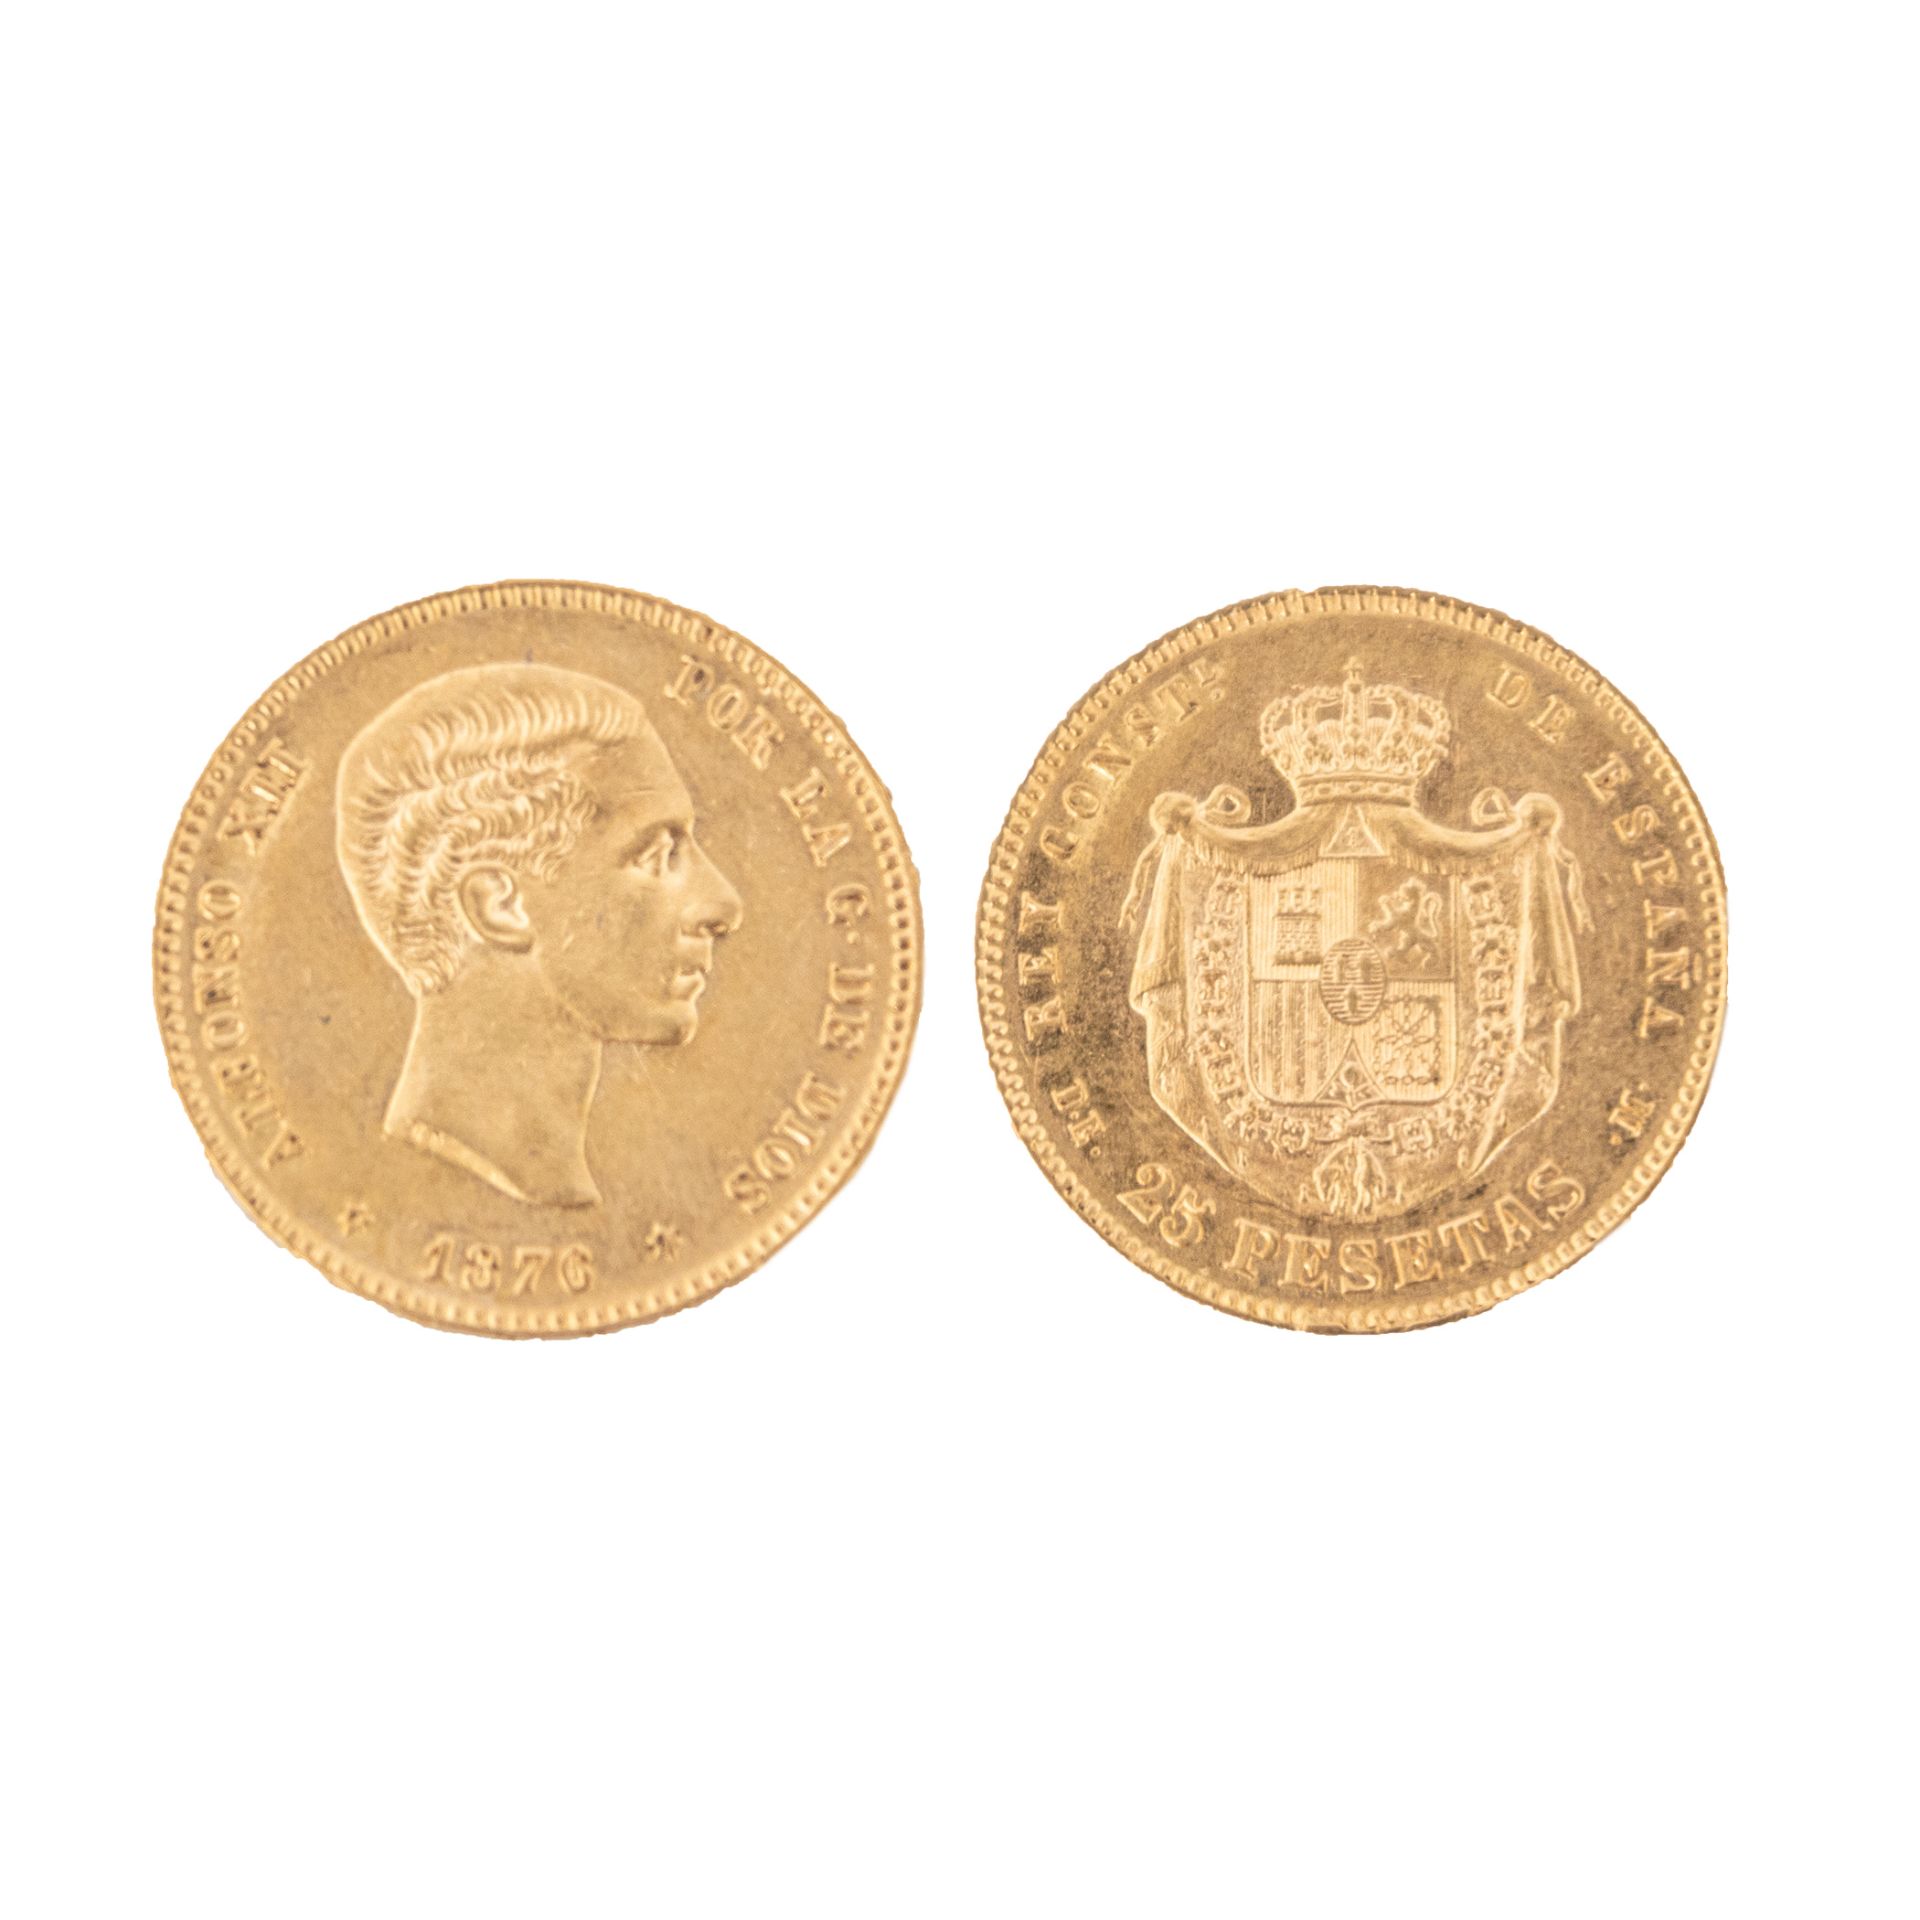 Spanish gold coin. Alfonso III 1876.